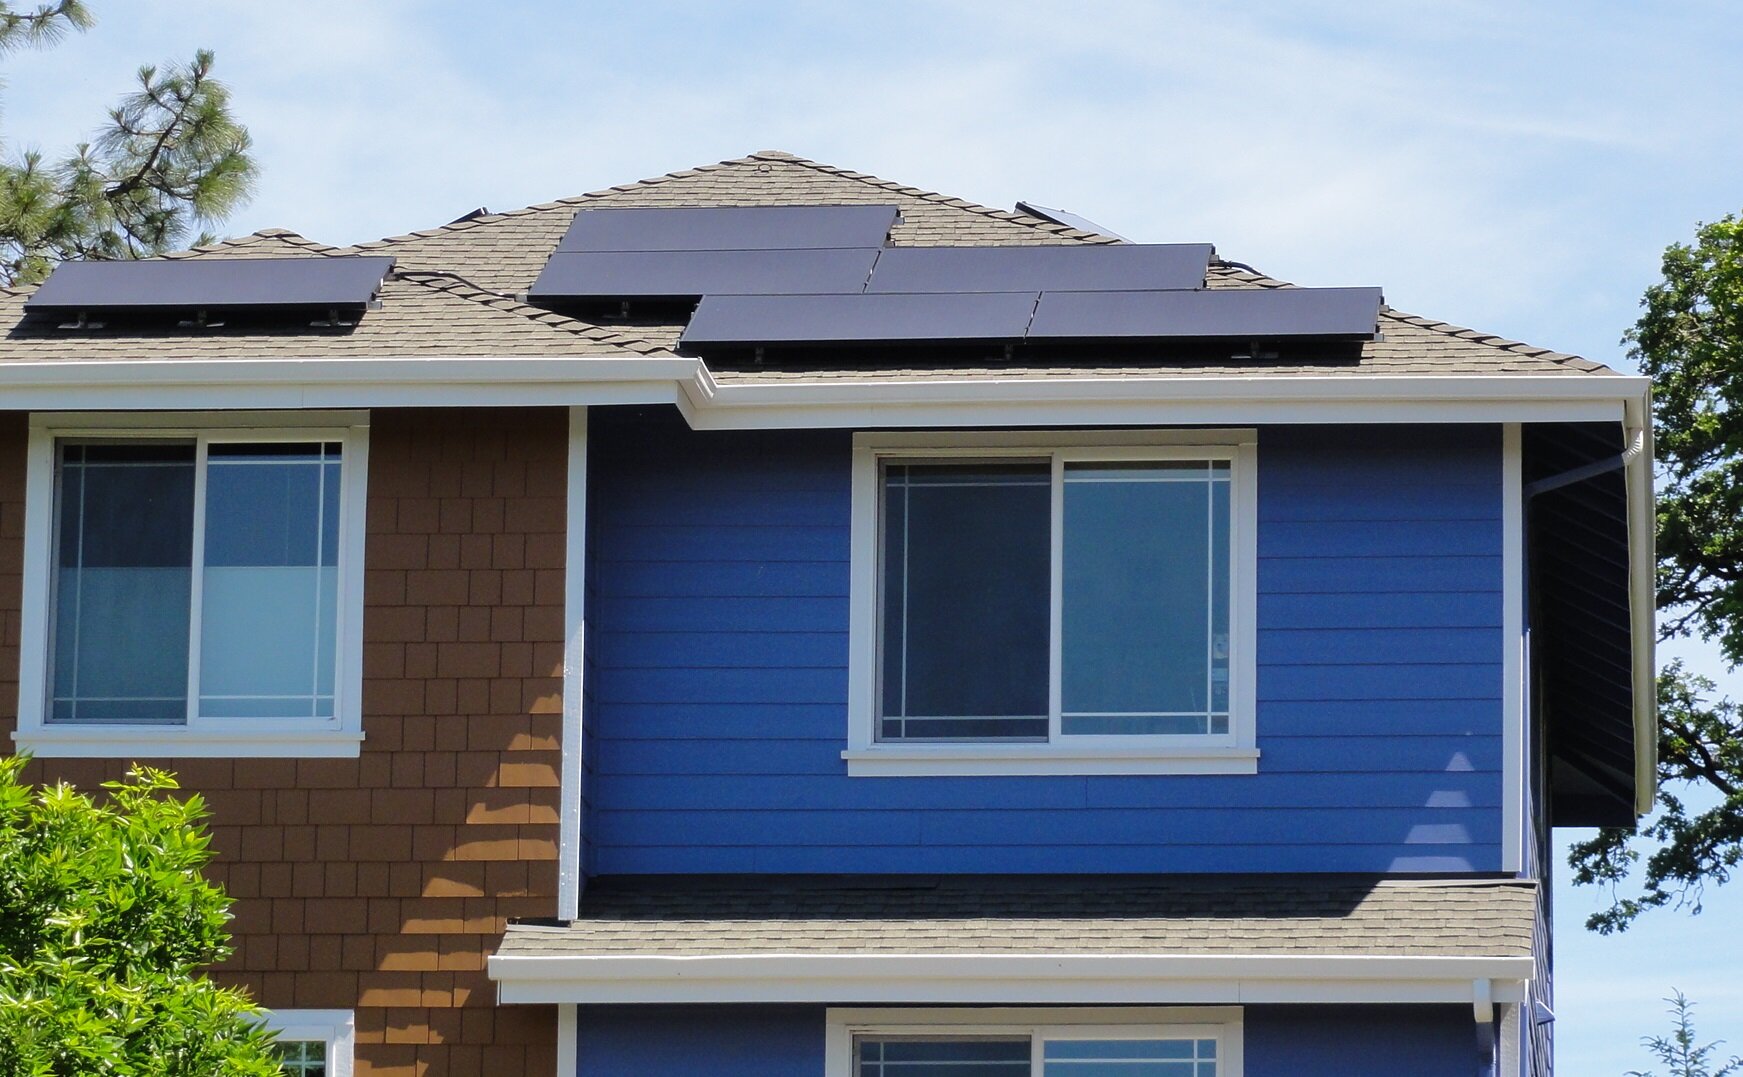 Oregon Department Of Energy Re Launching Solar Storage Rebate Program 